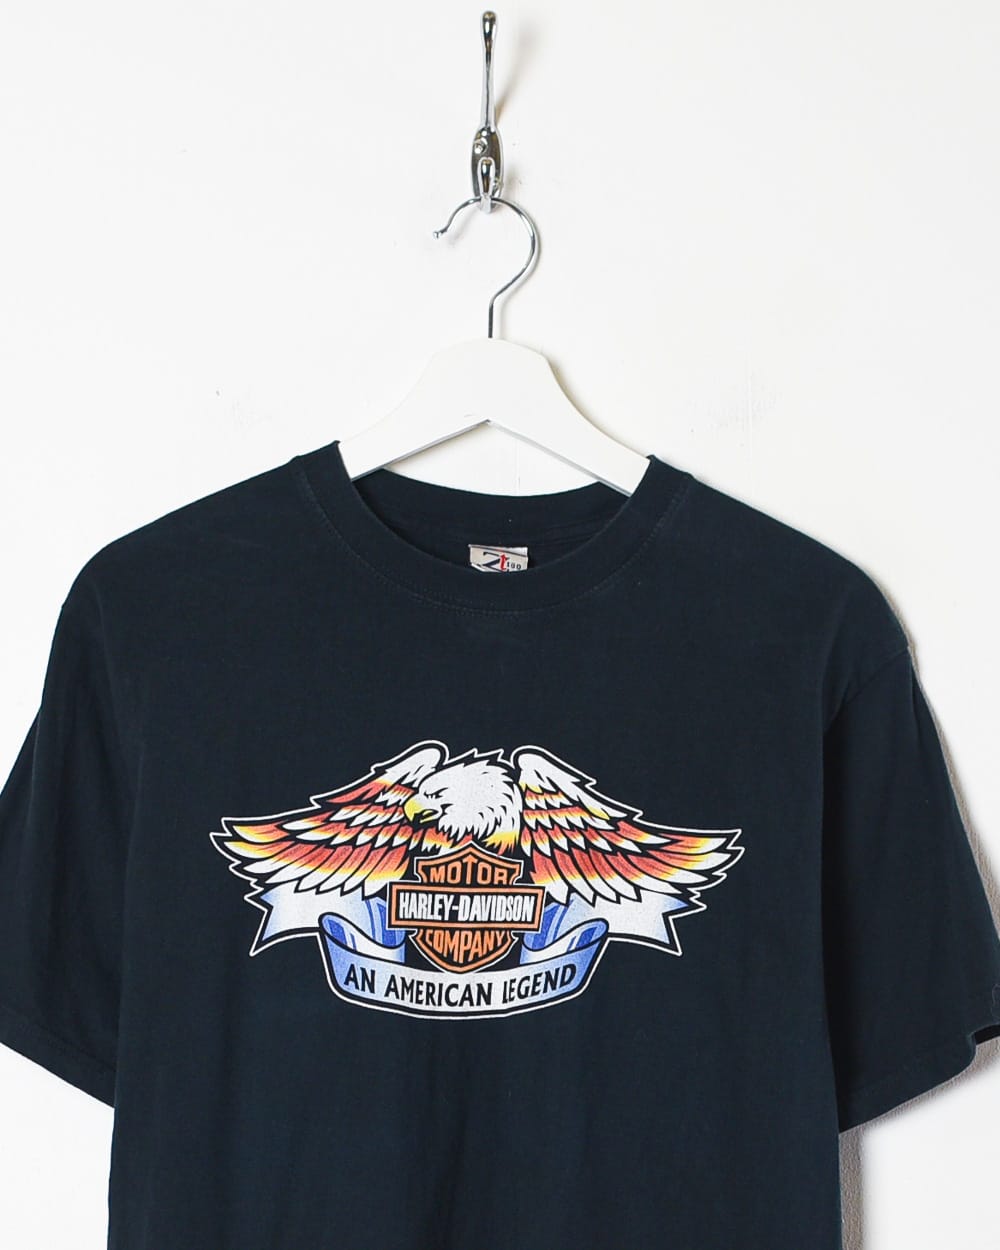 Black Harley Davidson An American Legend T-Shirt - Small